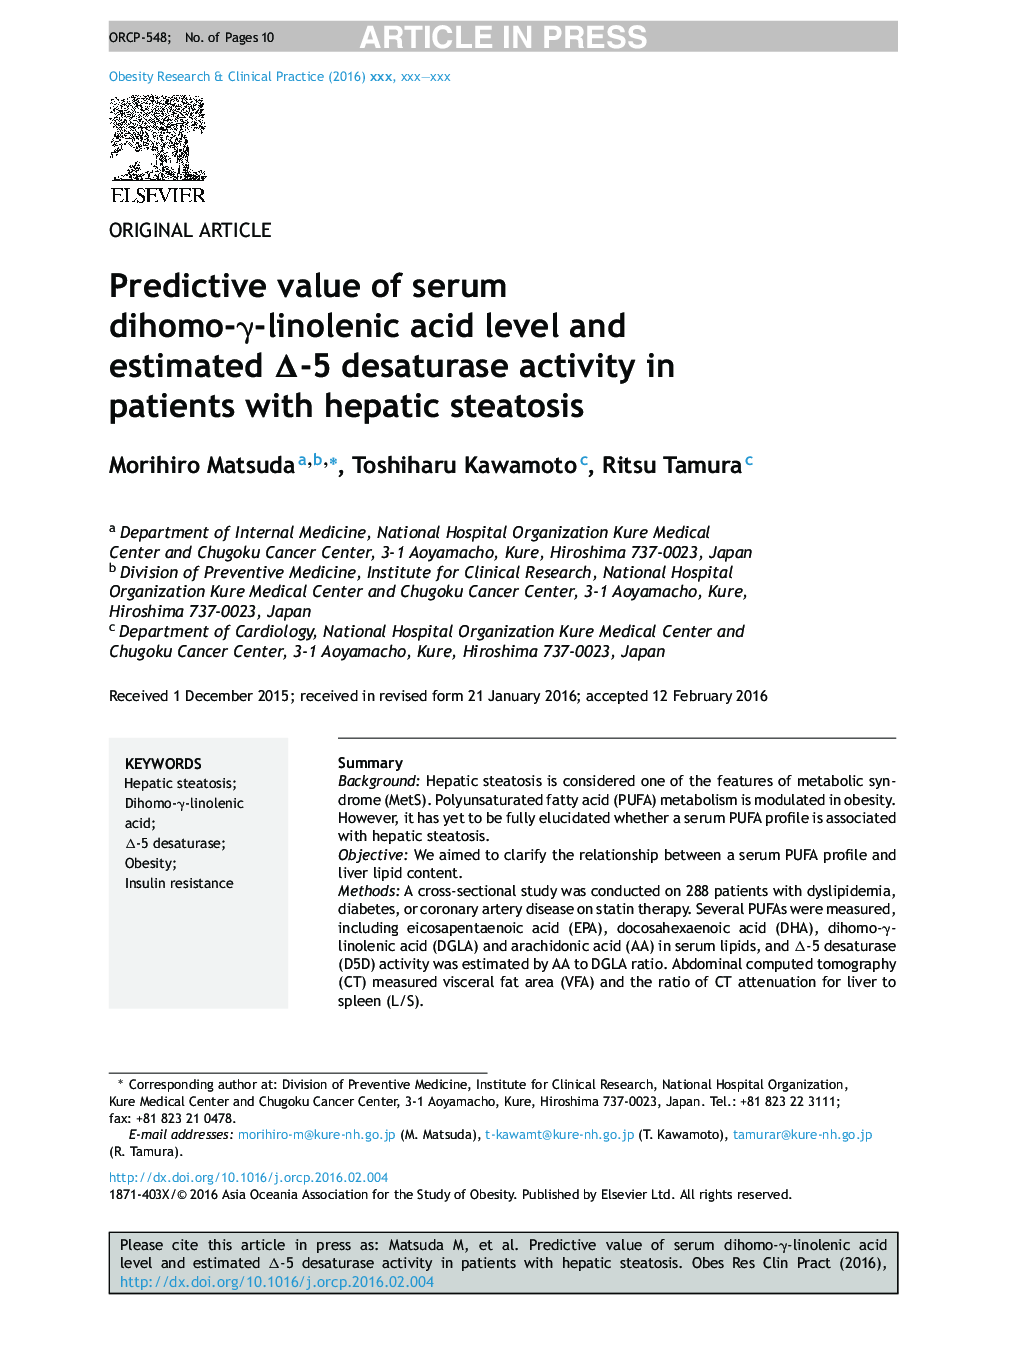 Predictive value of serum dihomo-Î³-linolenic acid level and estimated Î-5 desaturase activity in patients with hepatic steatosis